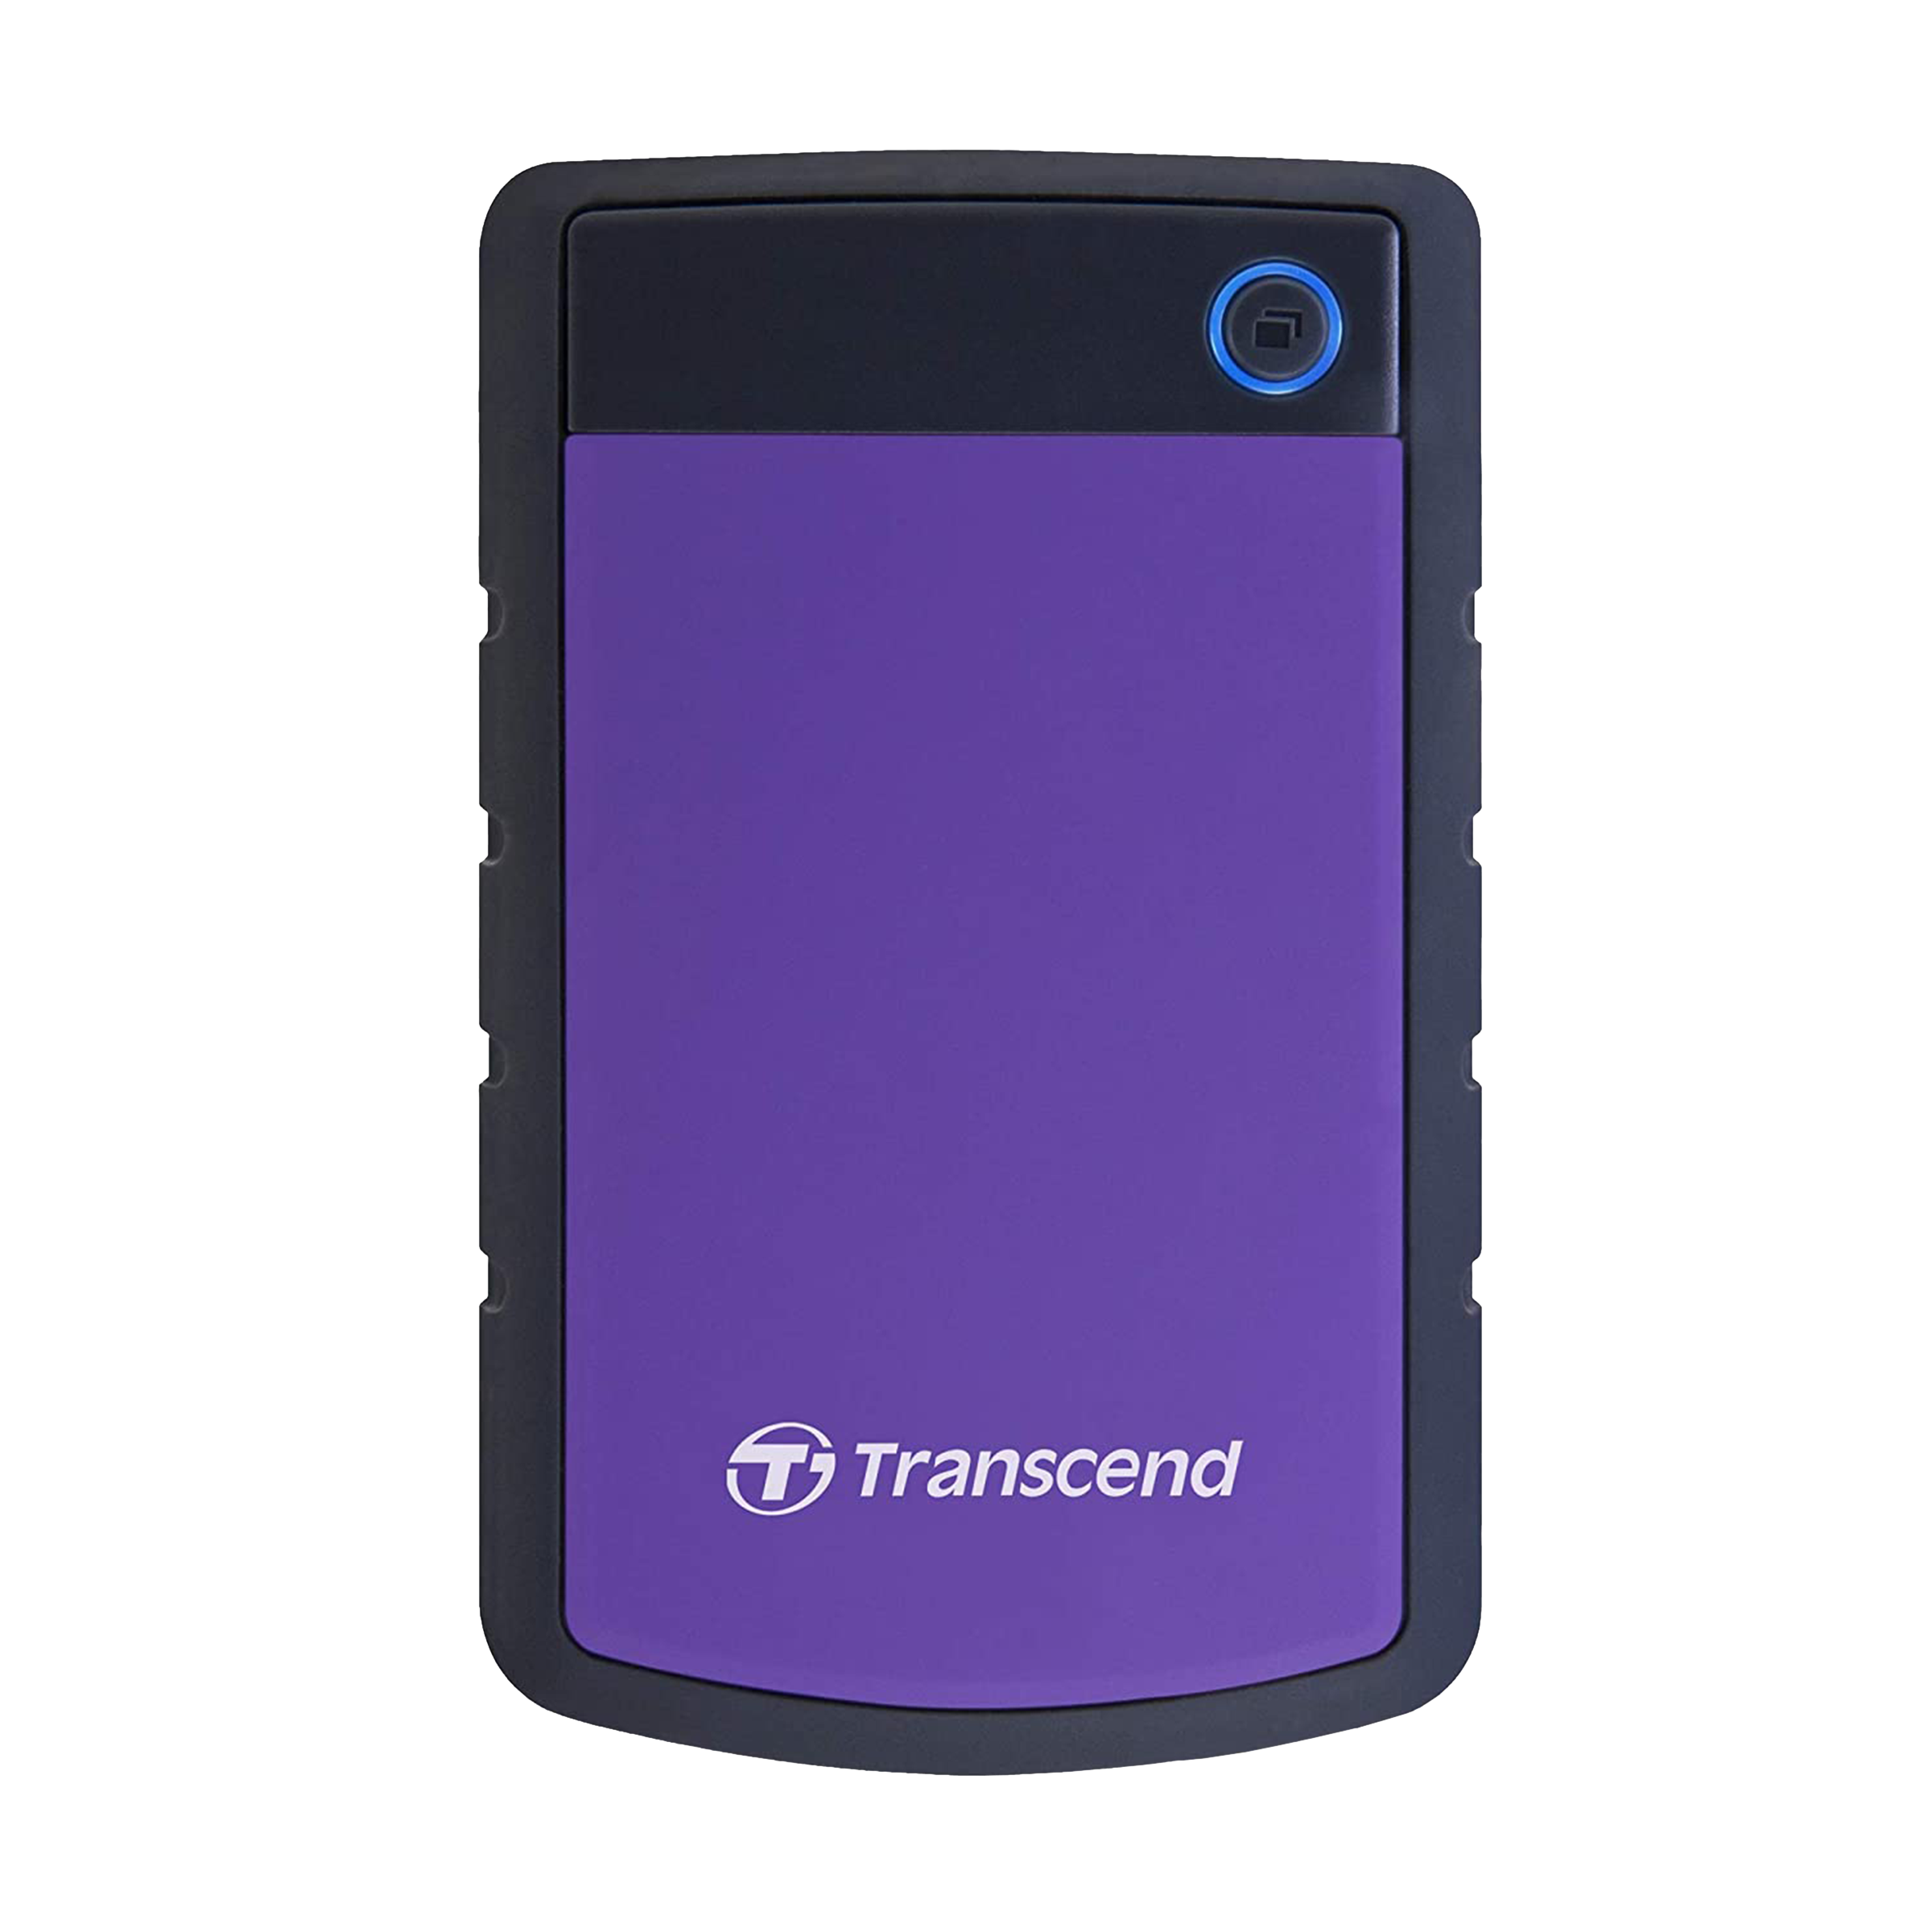 Transcend StoreJet 25H3 1 TB USB 3.1 Gen 1 Hard Disk Drive (One Touch Auto Backup, TS1TSJ25H3P, Purple)